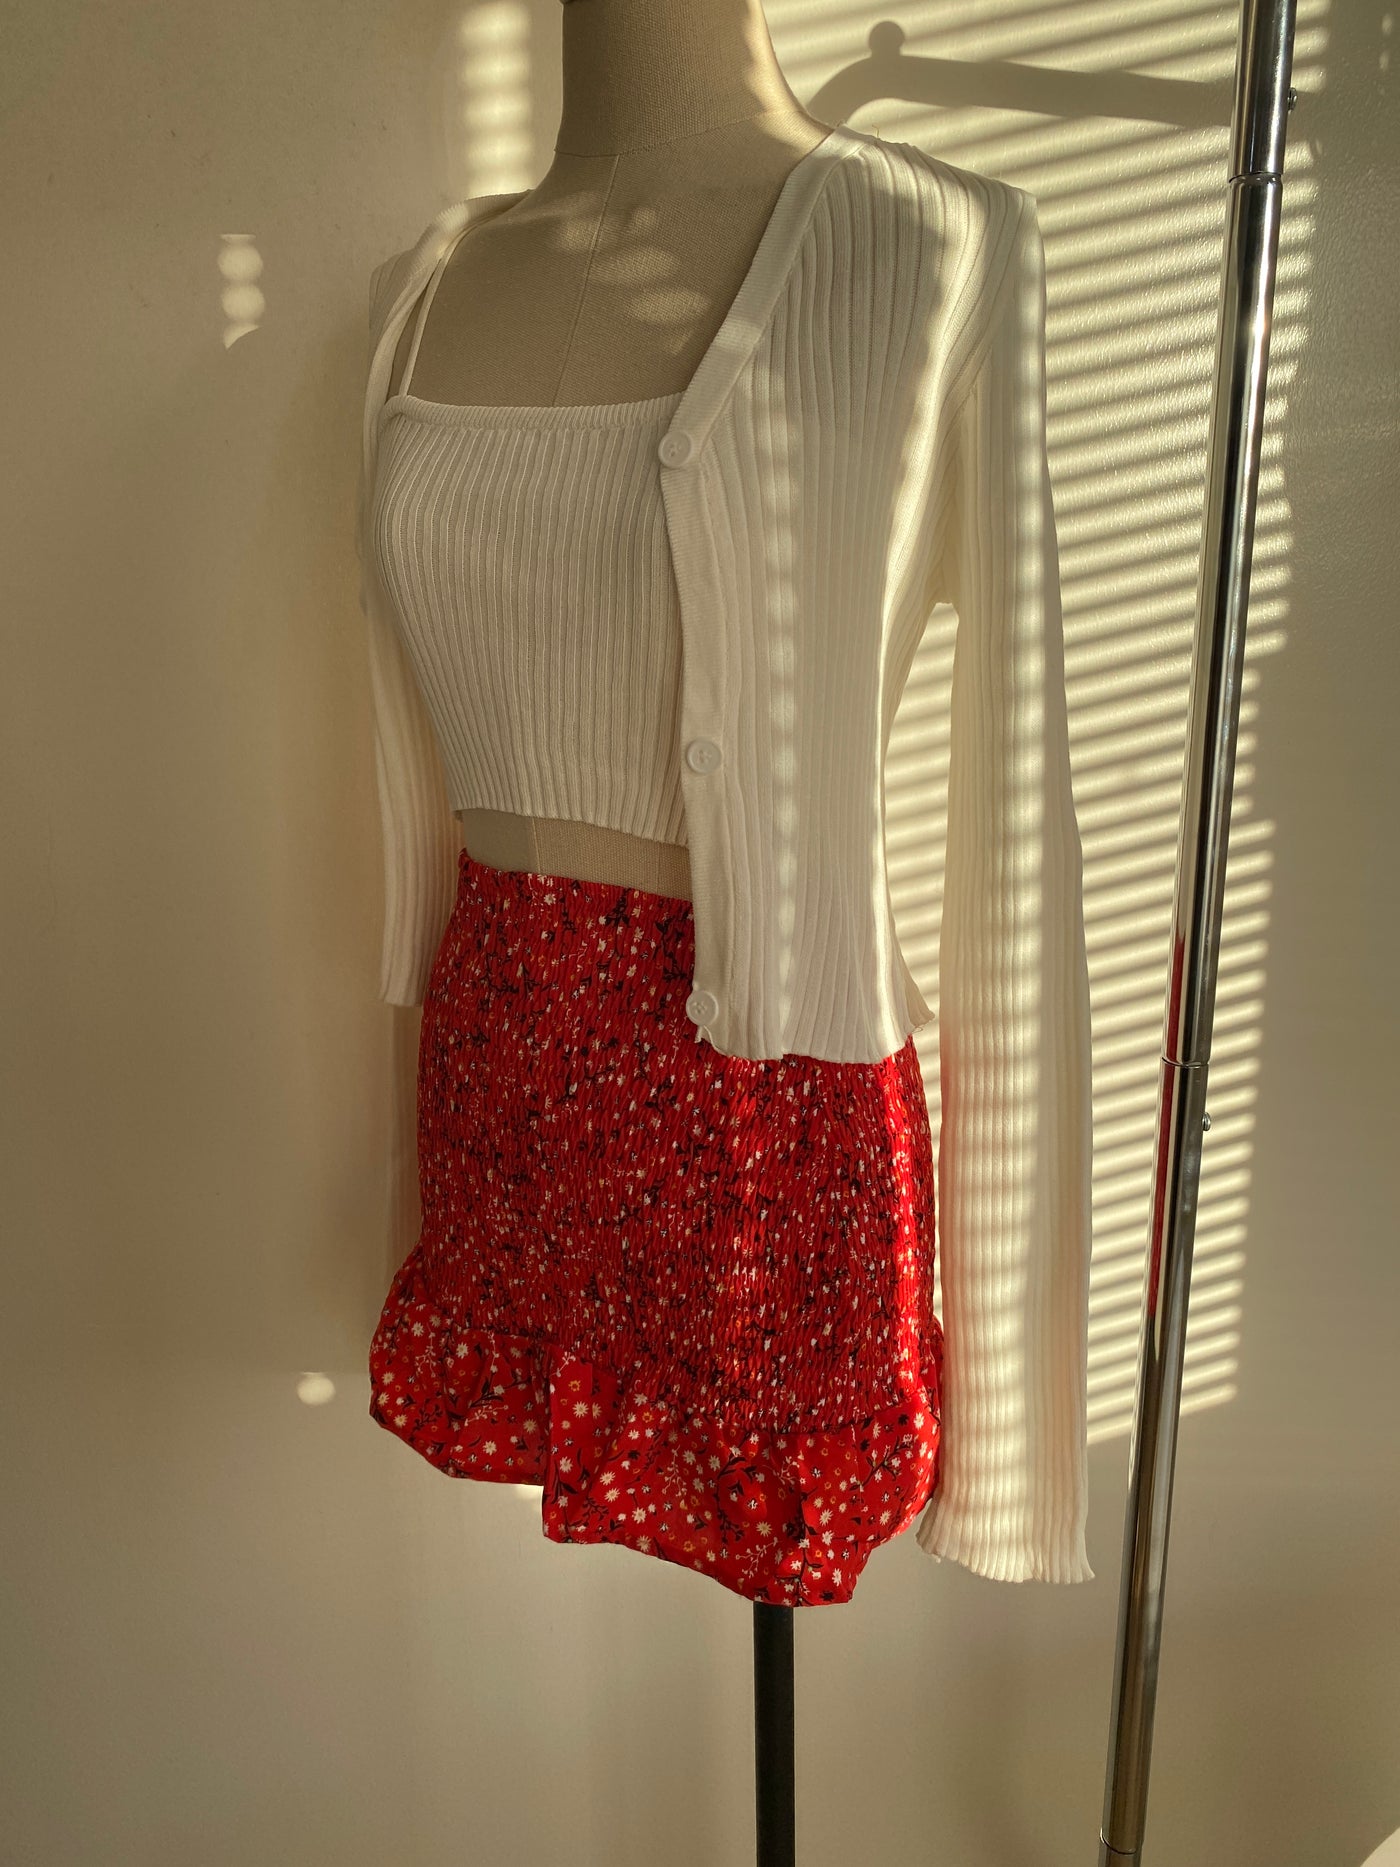 Ruffled Floral Skirt